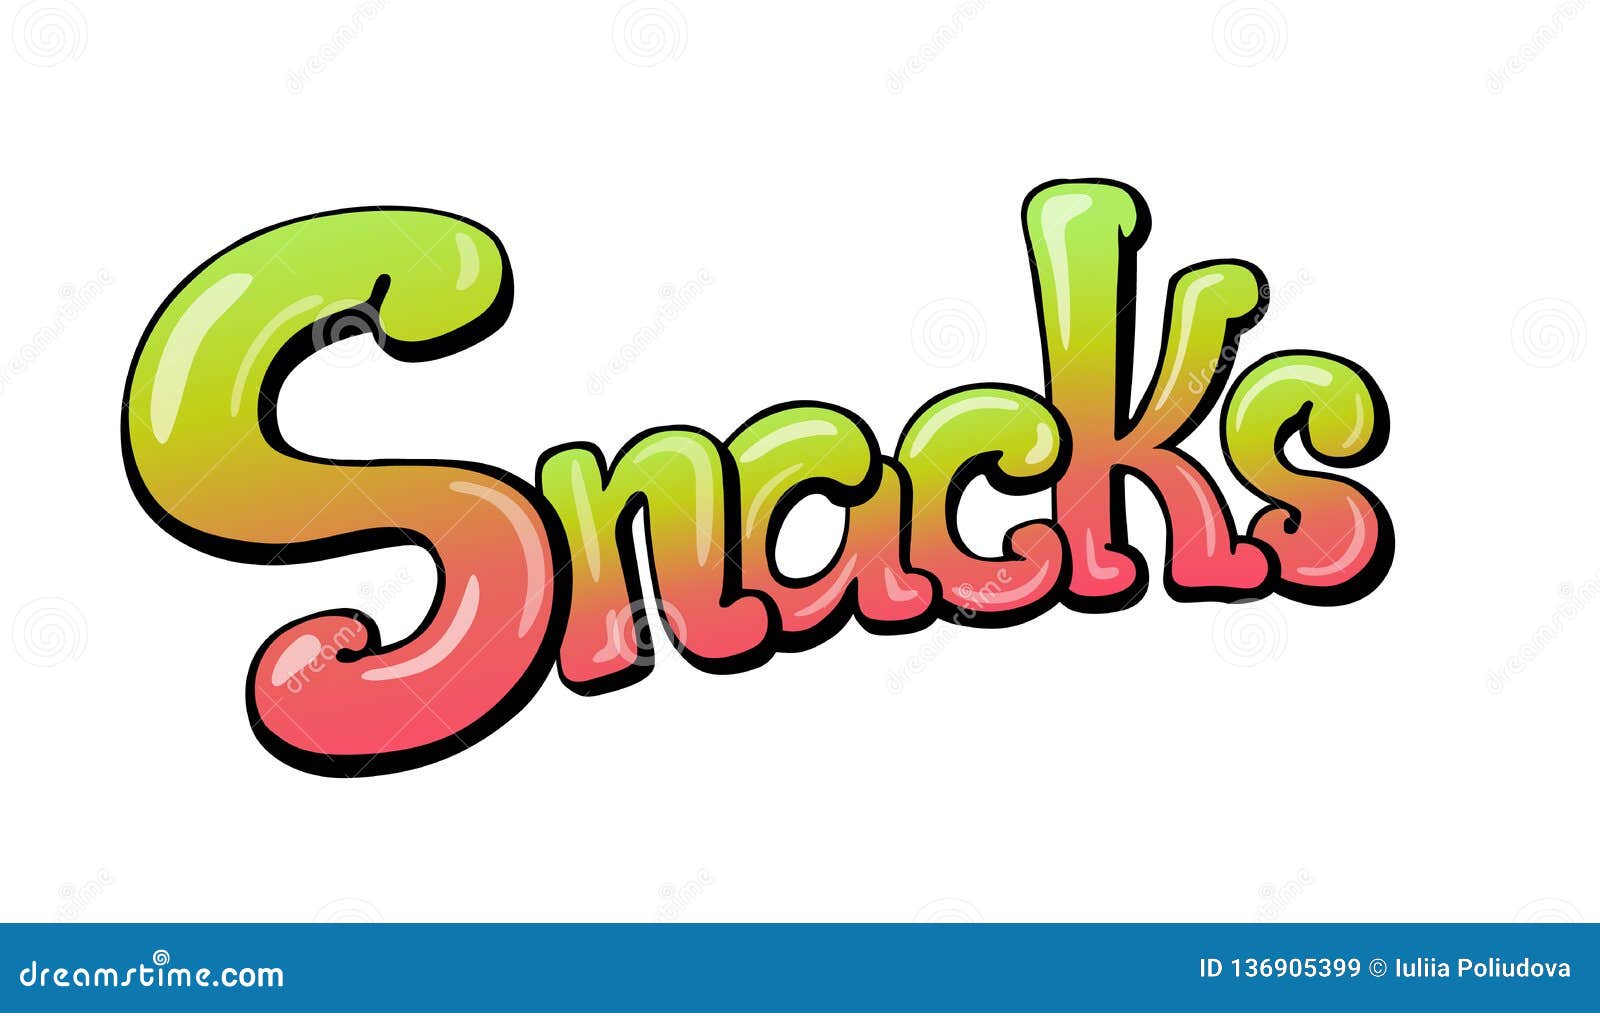 snacks title